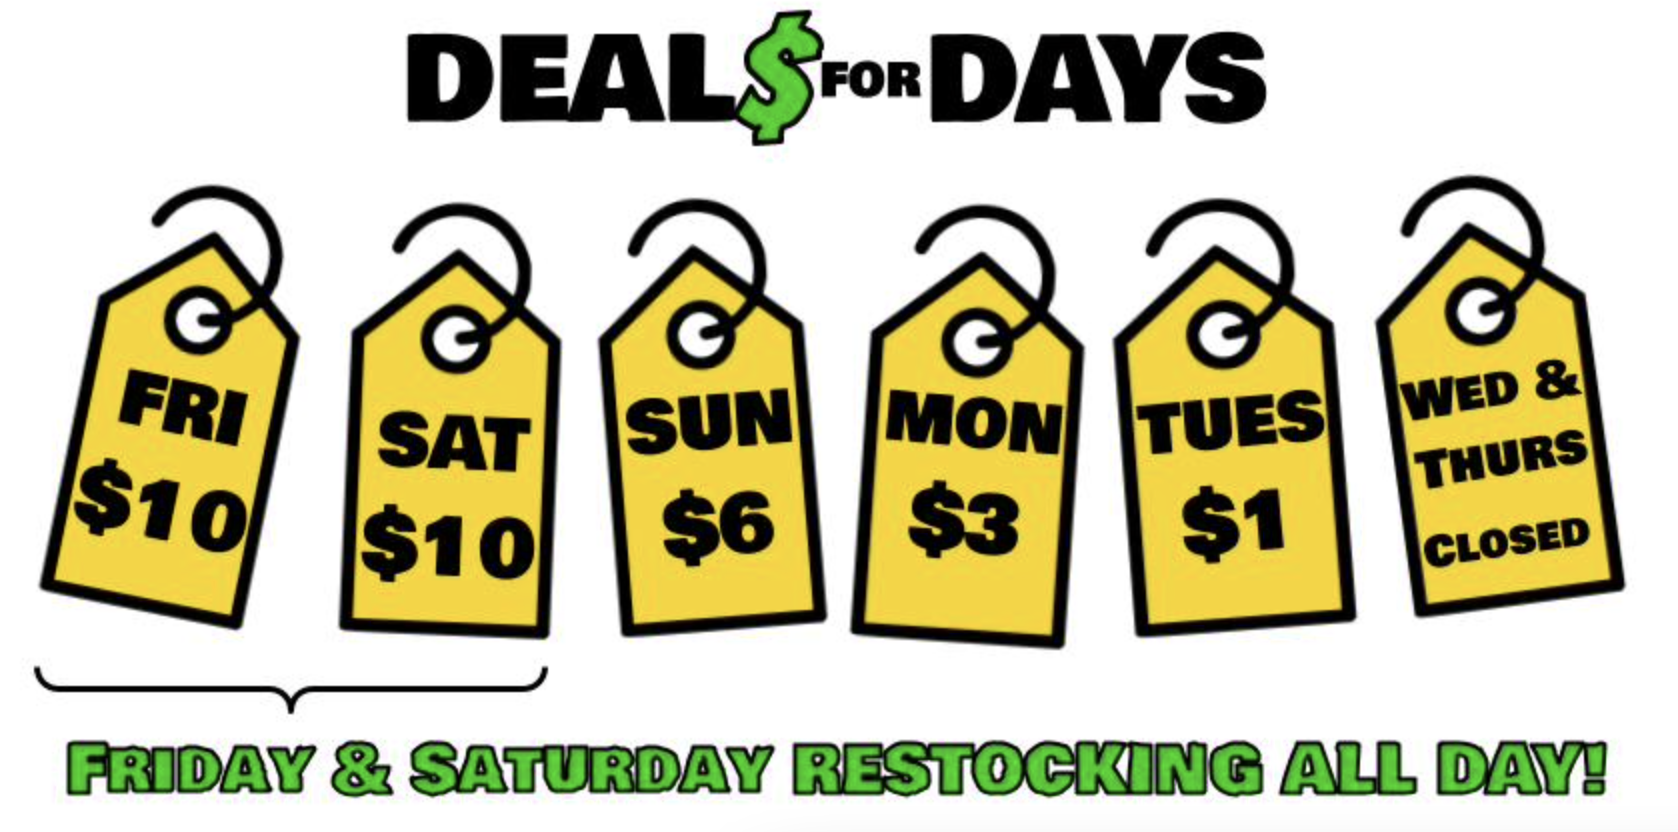 Deals for Days - Stockton, CA - Nextdoor